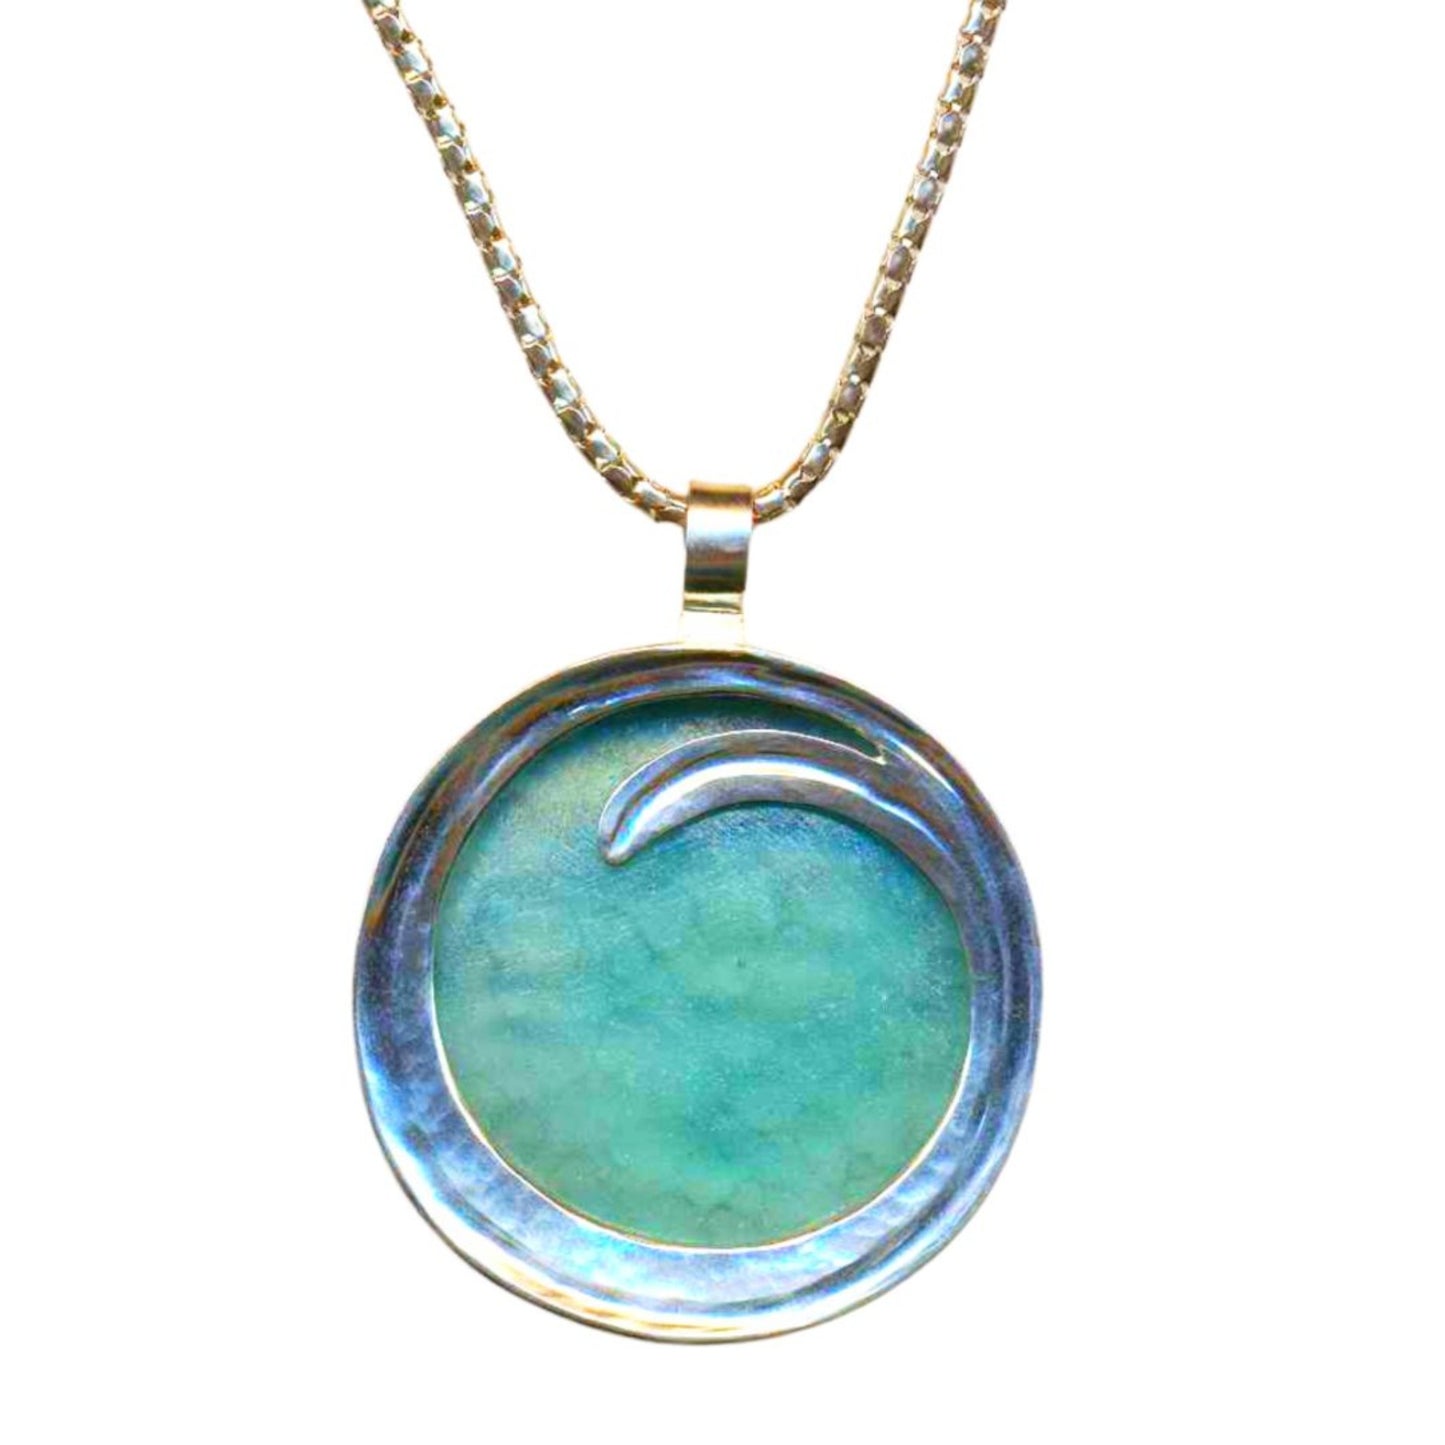 Bluenoemi Jewelry Necklaces & Pendants silver Roman glass jewelry necklace. Designer Israeli Sterling silver necklace set with roman glass